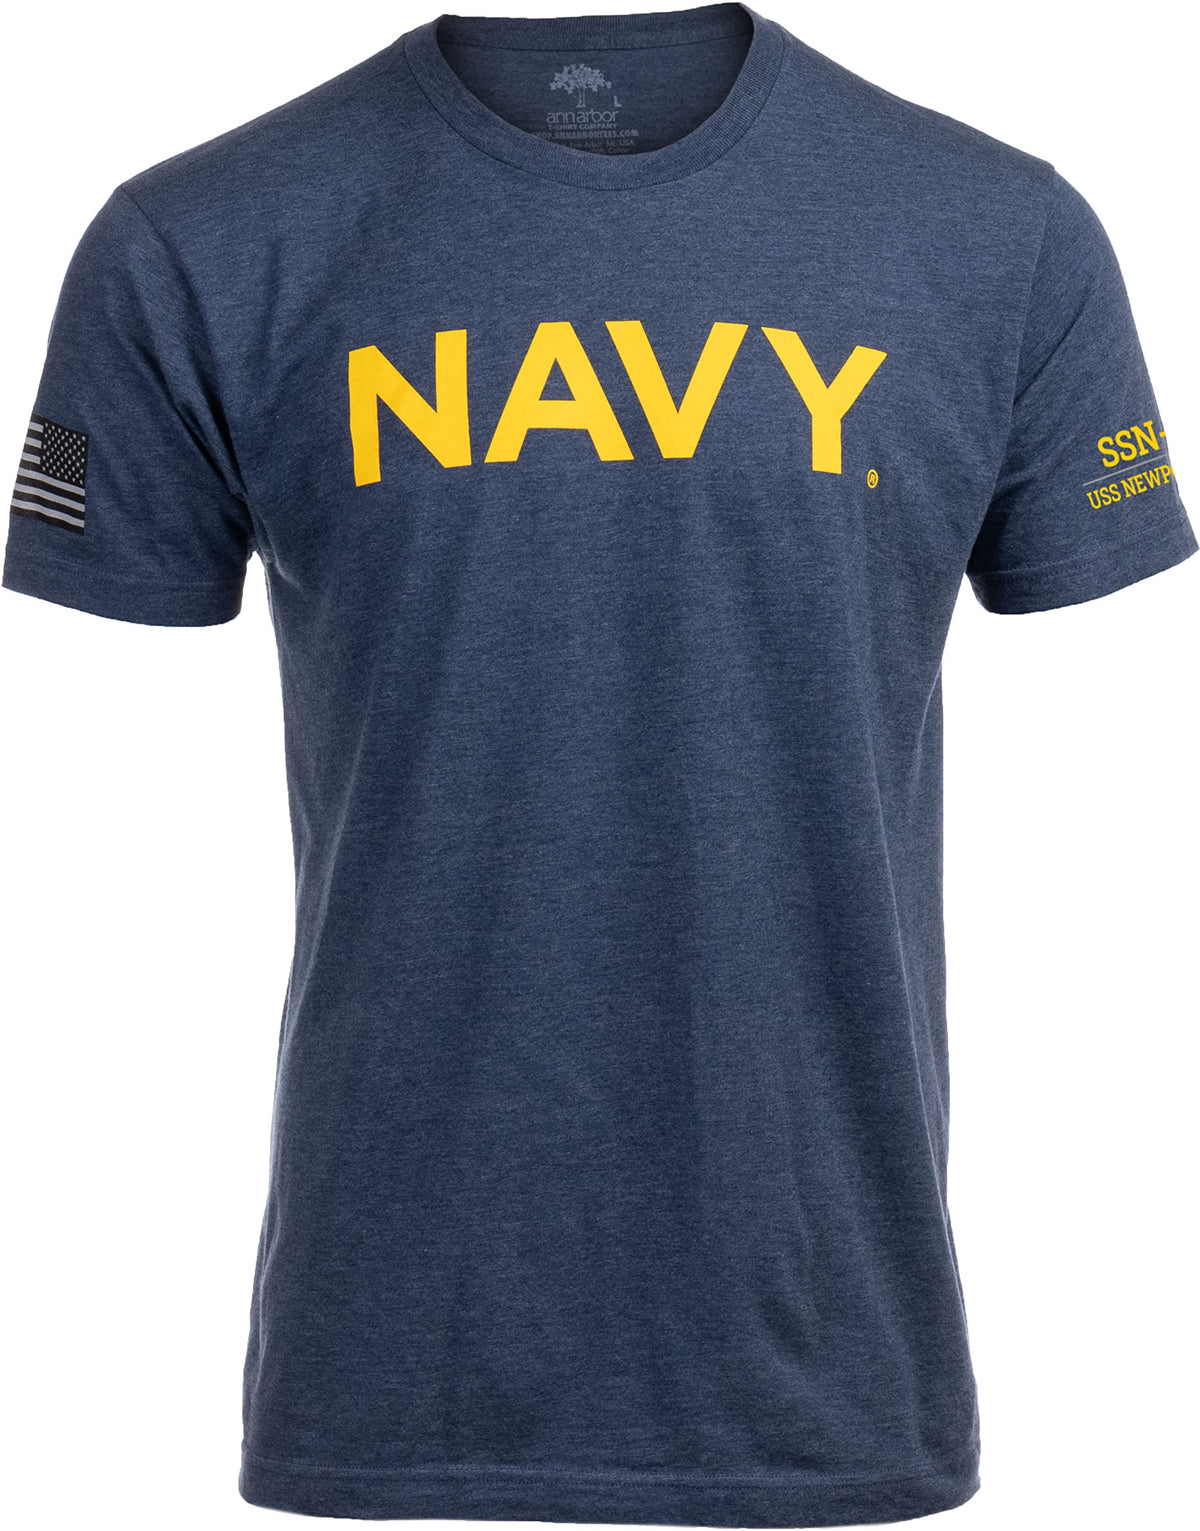 USS Newport News, SSN-750 | U.S. Navy Sailor Veteran USN United States Naval T-shirt for Men Women